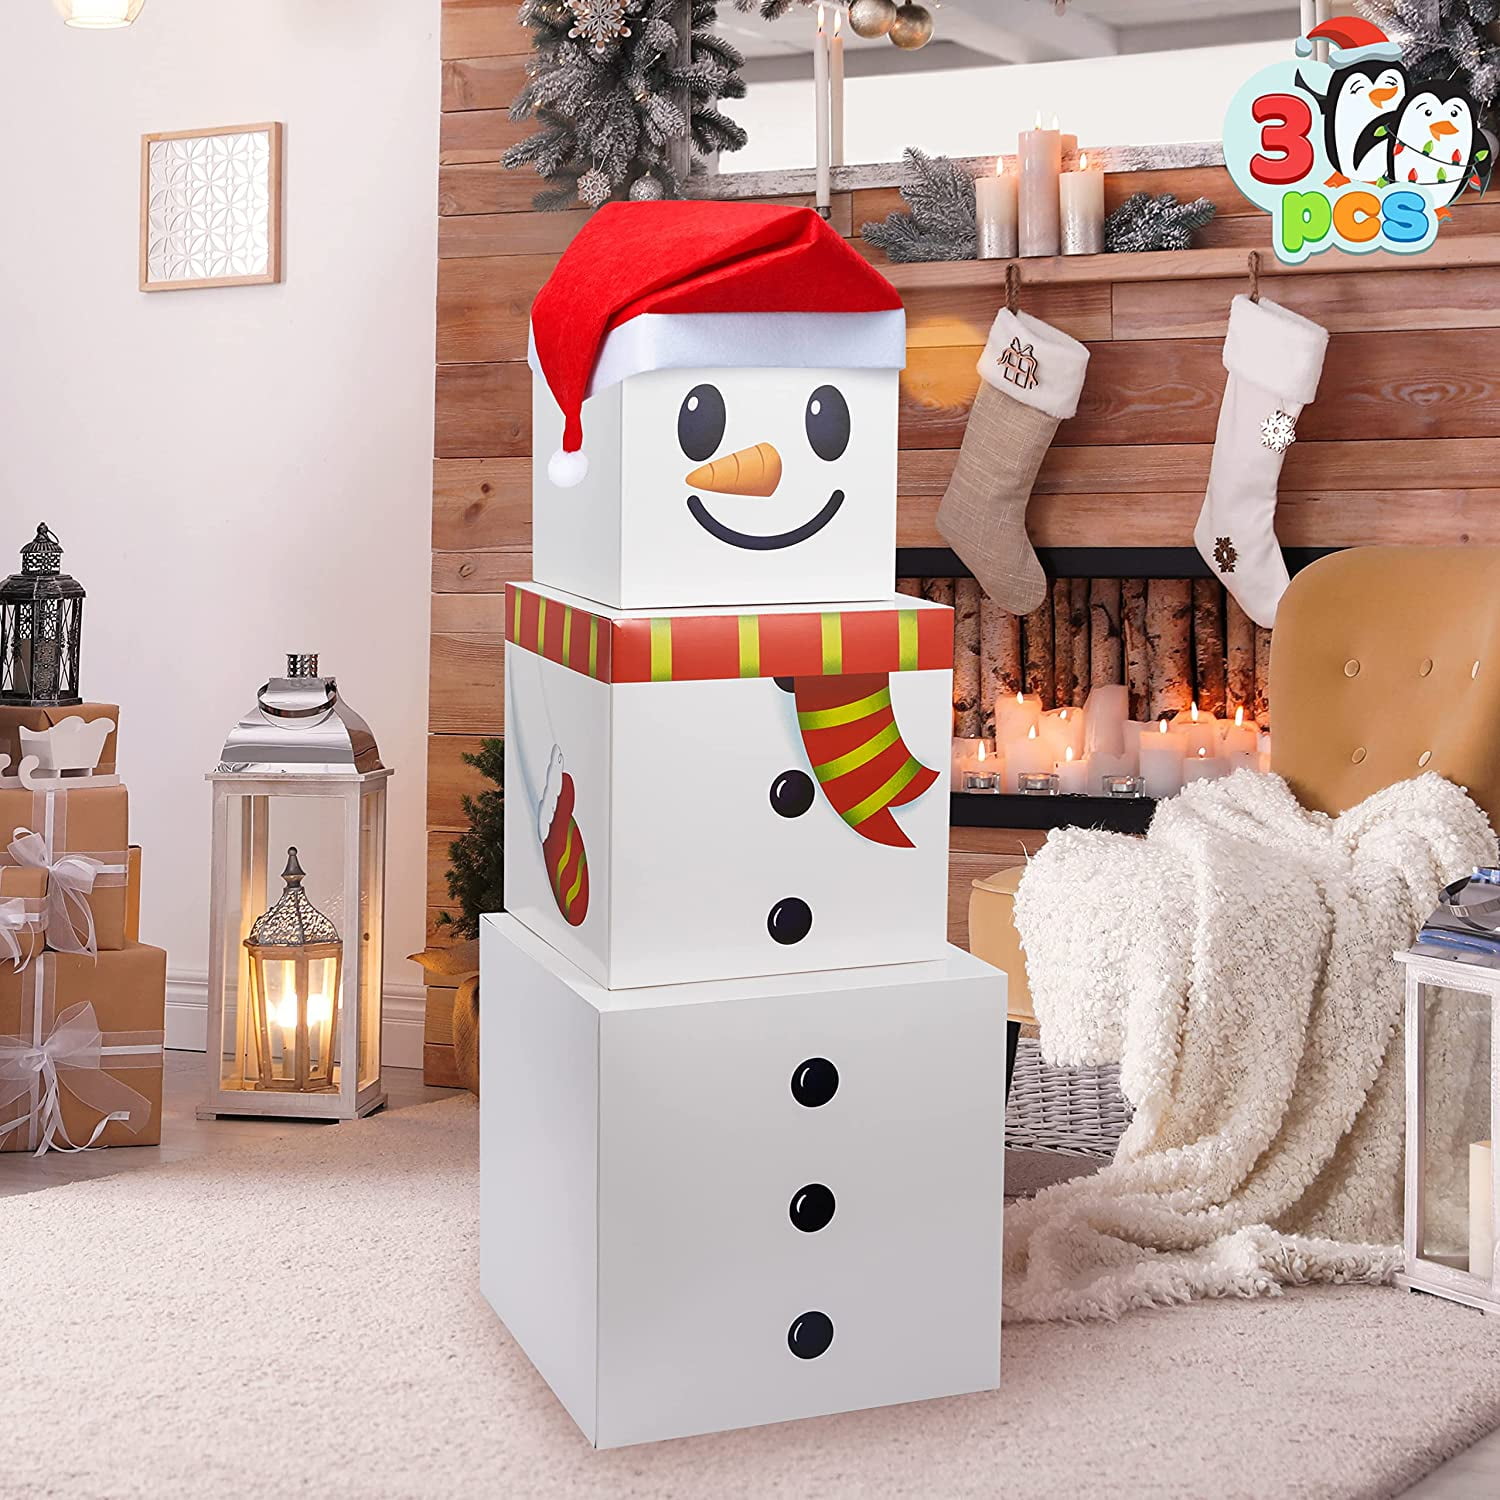 3D Wooden Assembling Merry Christmas Snowman Home Warm Bedroom Decor Gifts USA 